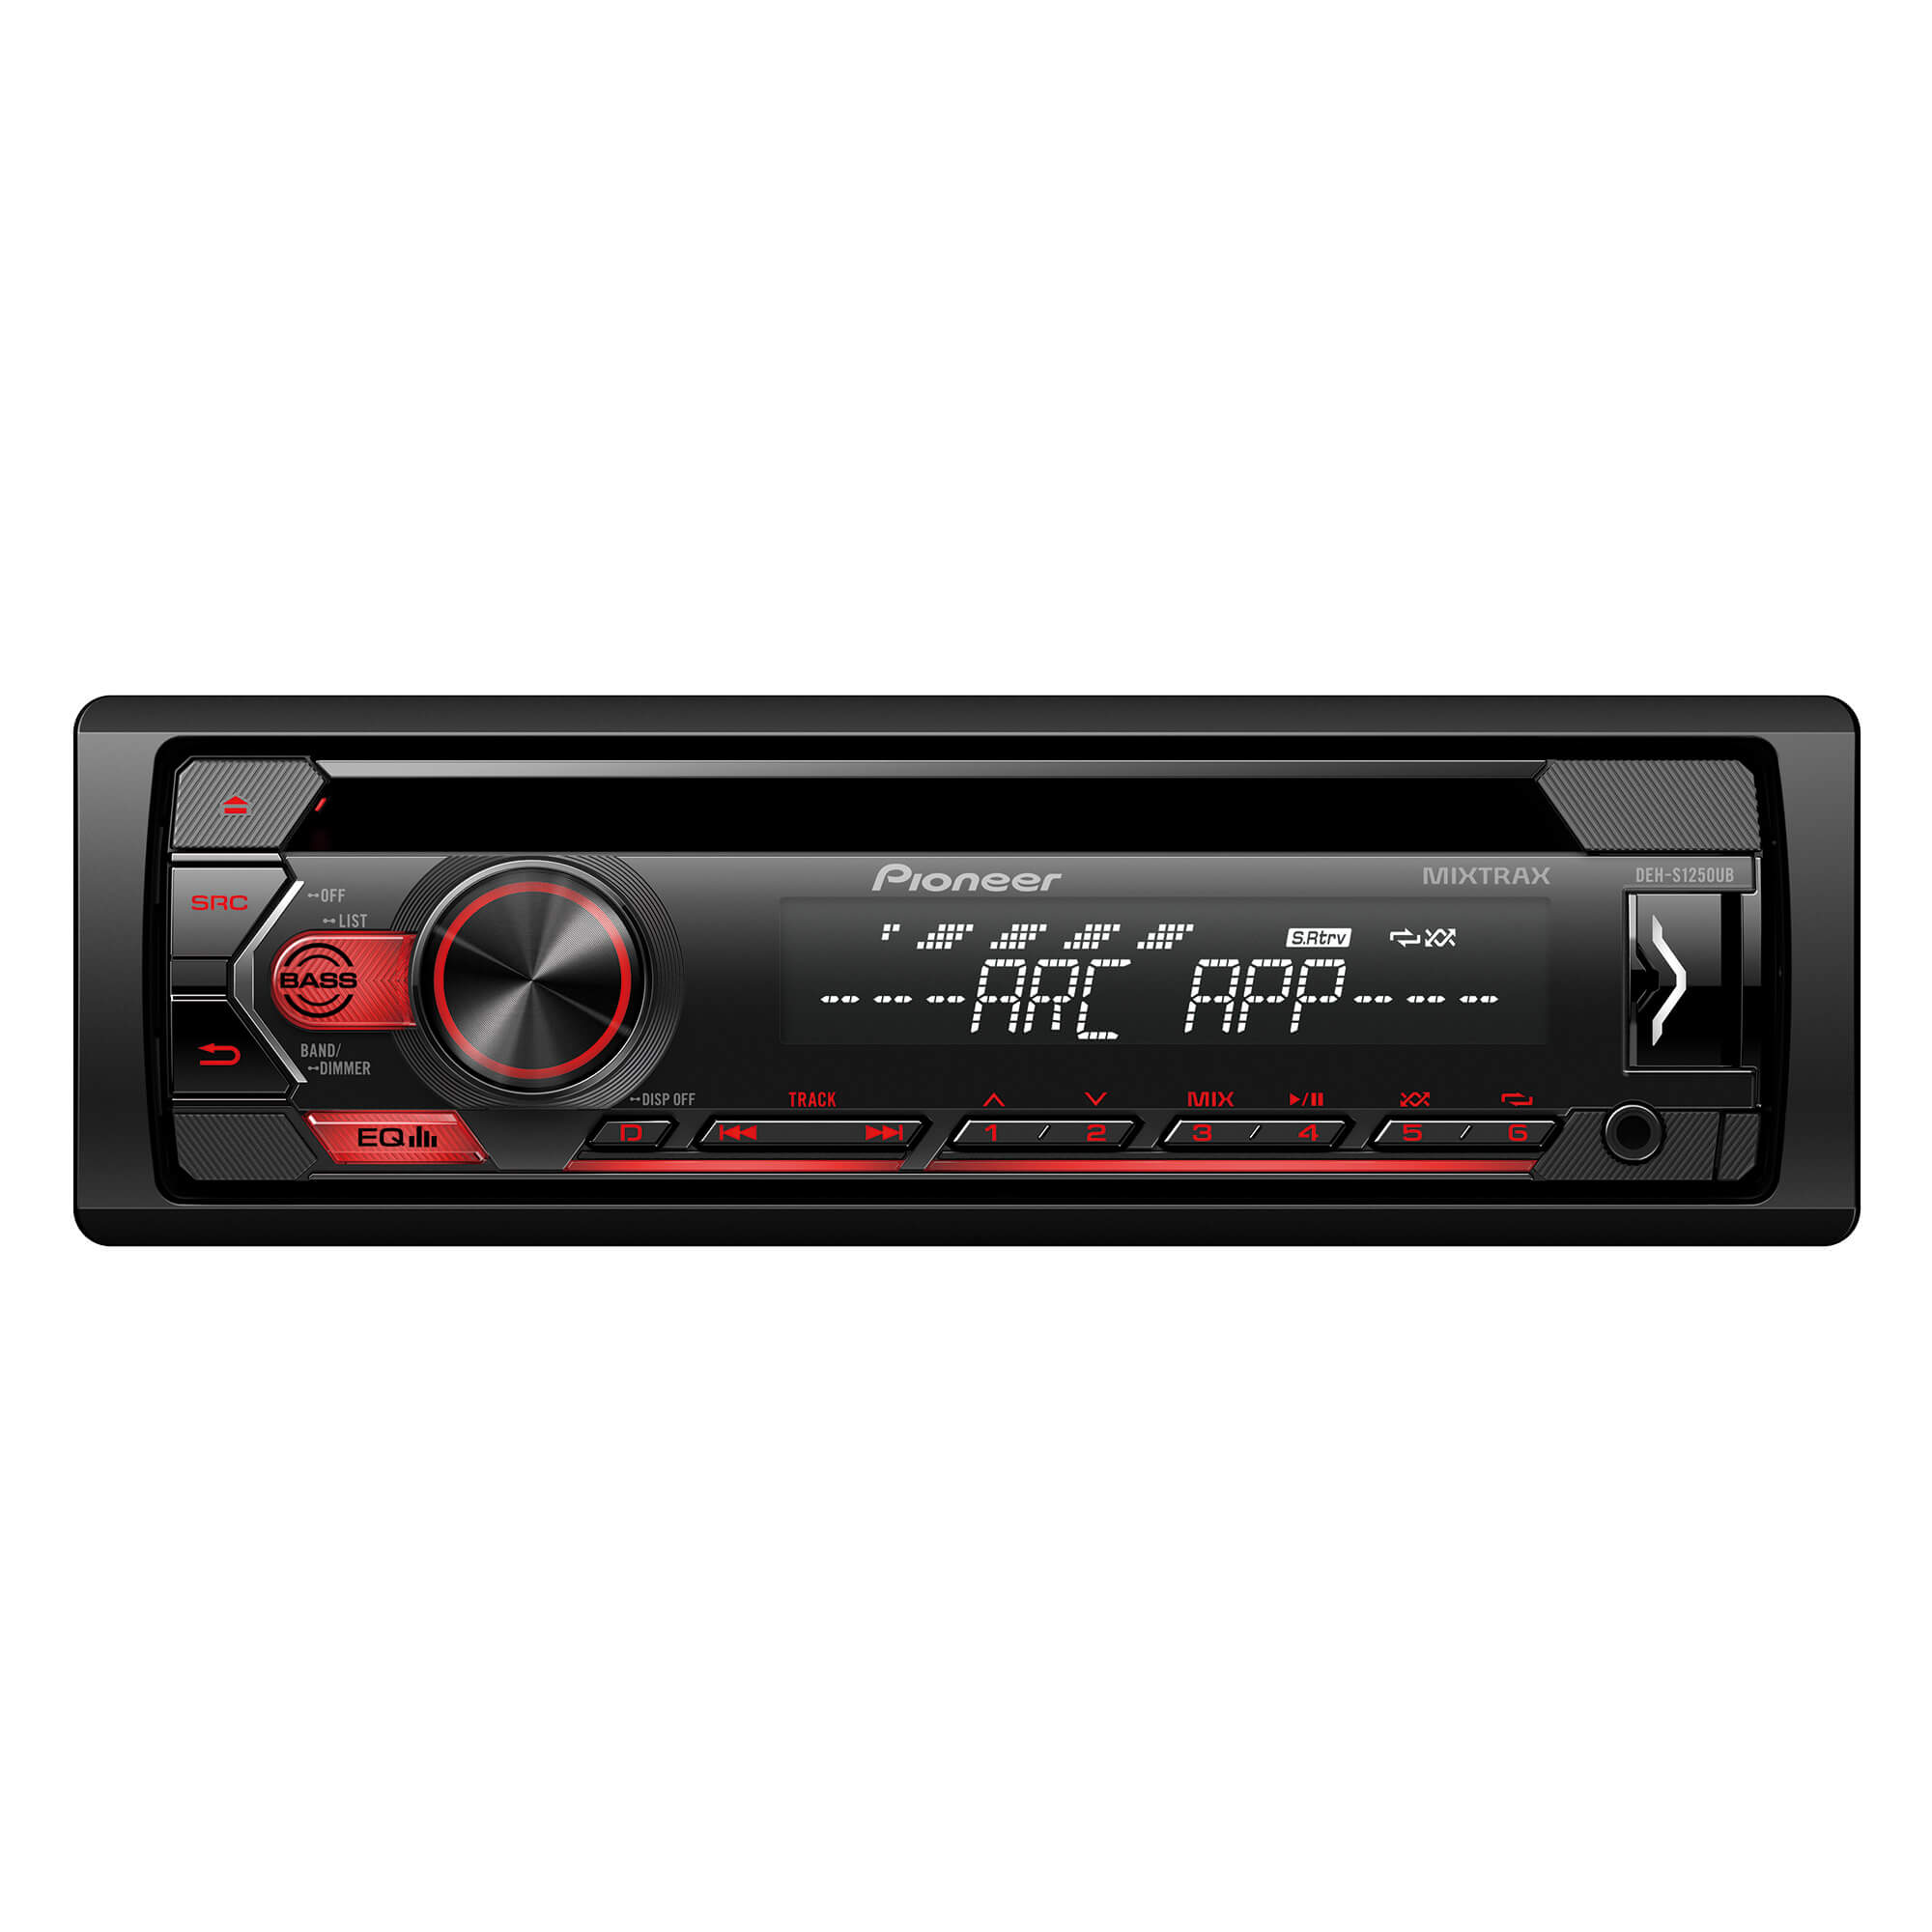 Reproductor de CD Bluetooth para coche 12V Audio Coche Estéreo Reproductor  de MP3 AM / Remoto 7 Fanmusic Reproductor de CD Bluetooth para coche